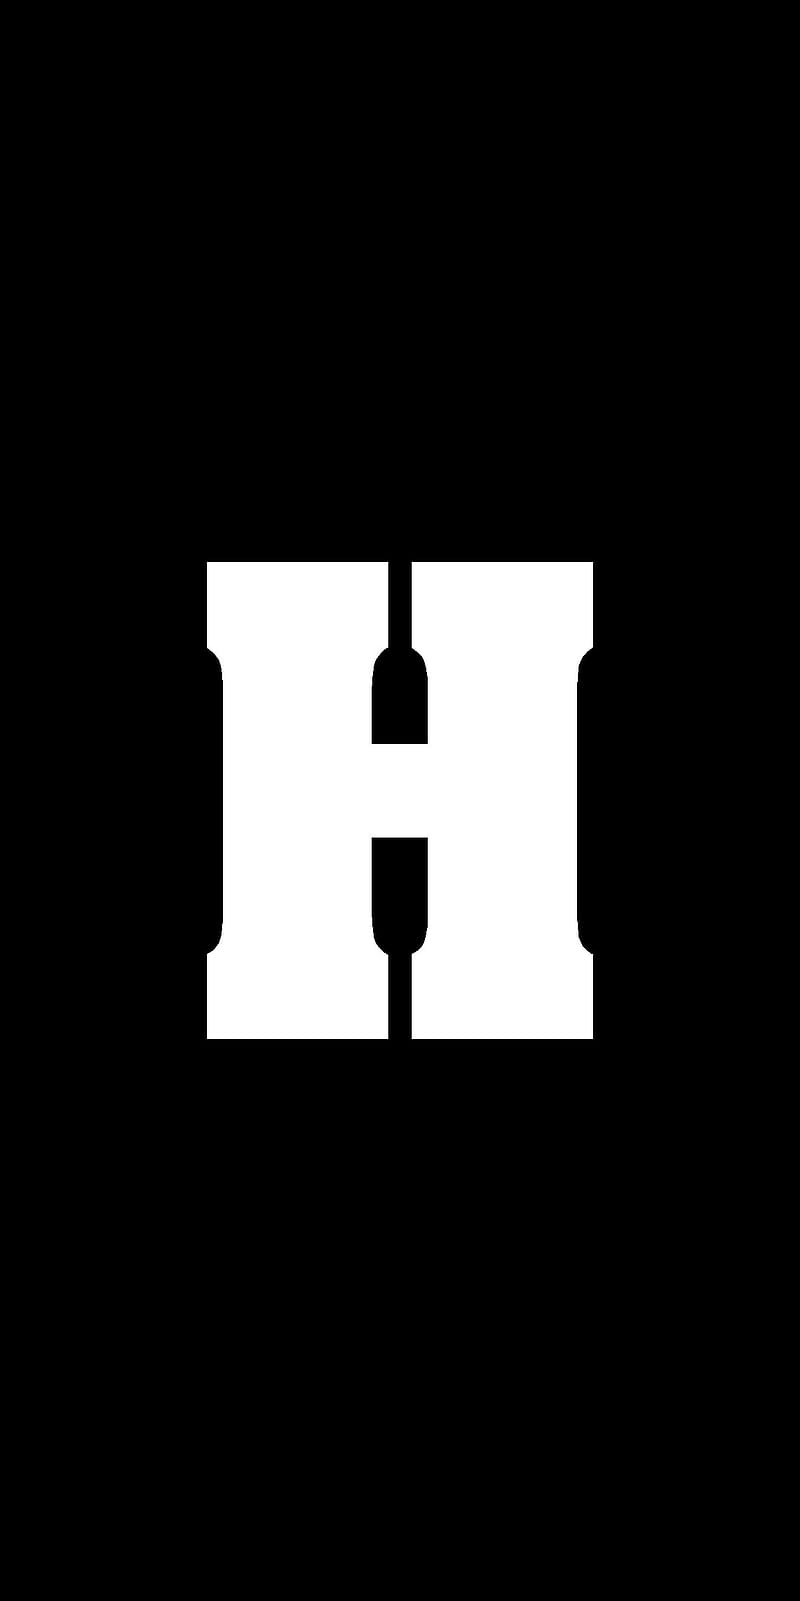 Brandmark 'H' | Graphic design logo, Minimal logo design, Monogram logo  design